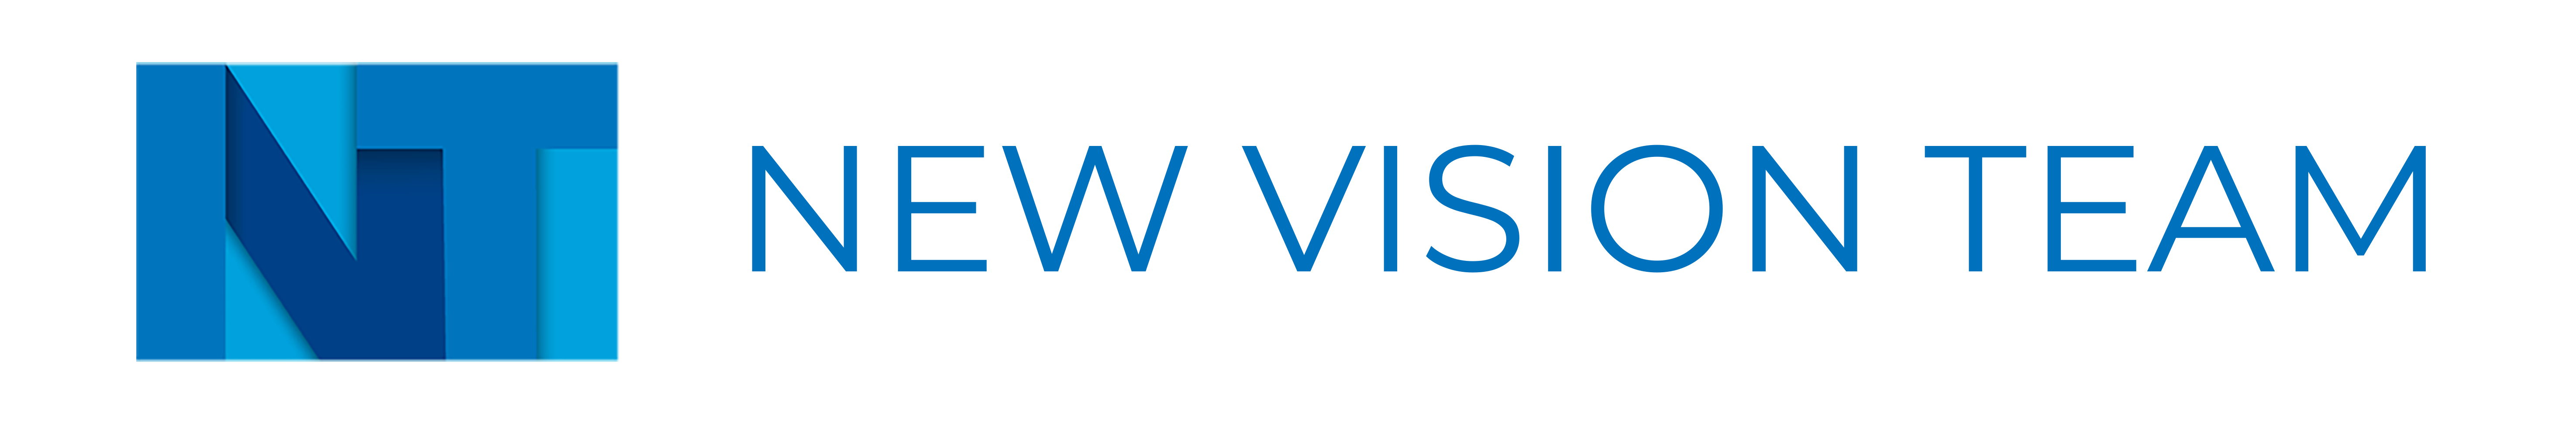 Survey - New Vision Team